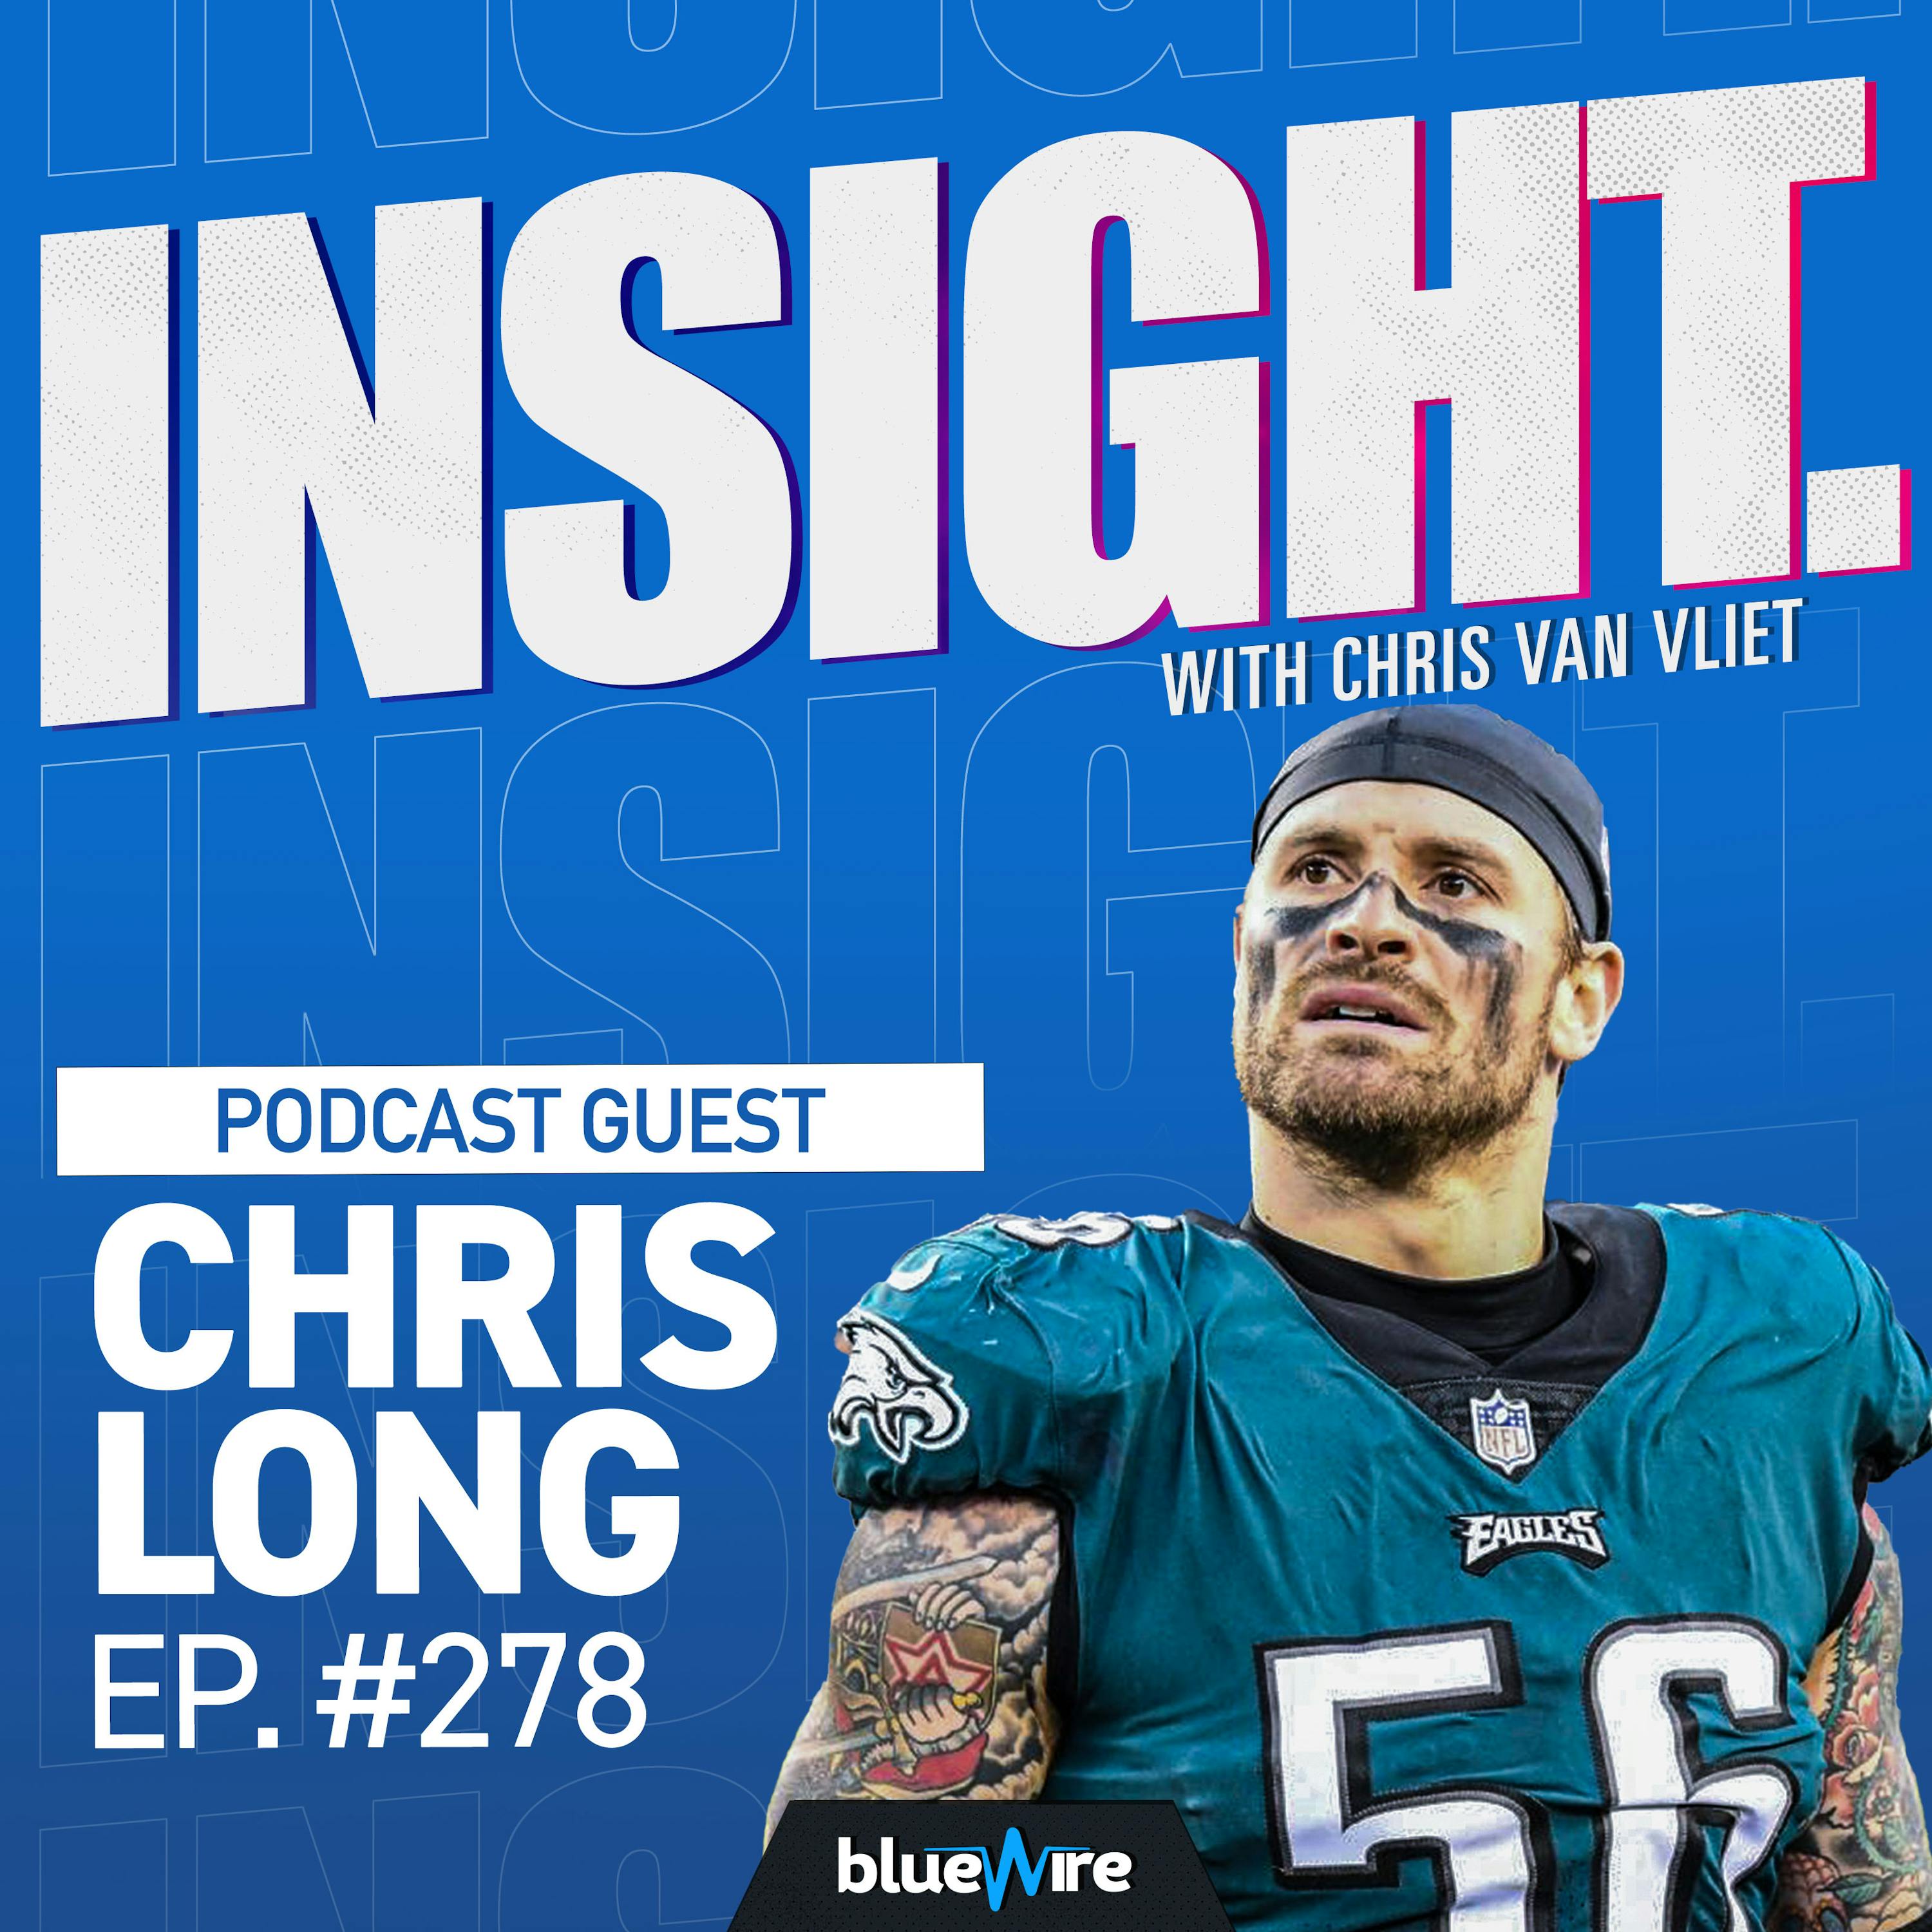 2-Time Super Bowl Champion Chris Long On Developing a Champion's Mindset